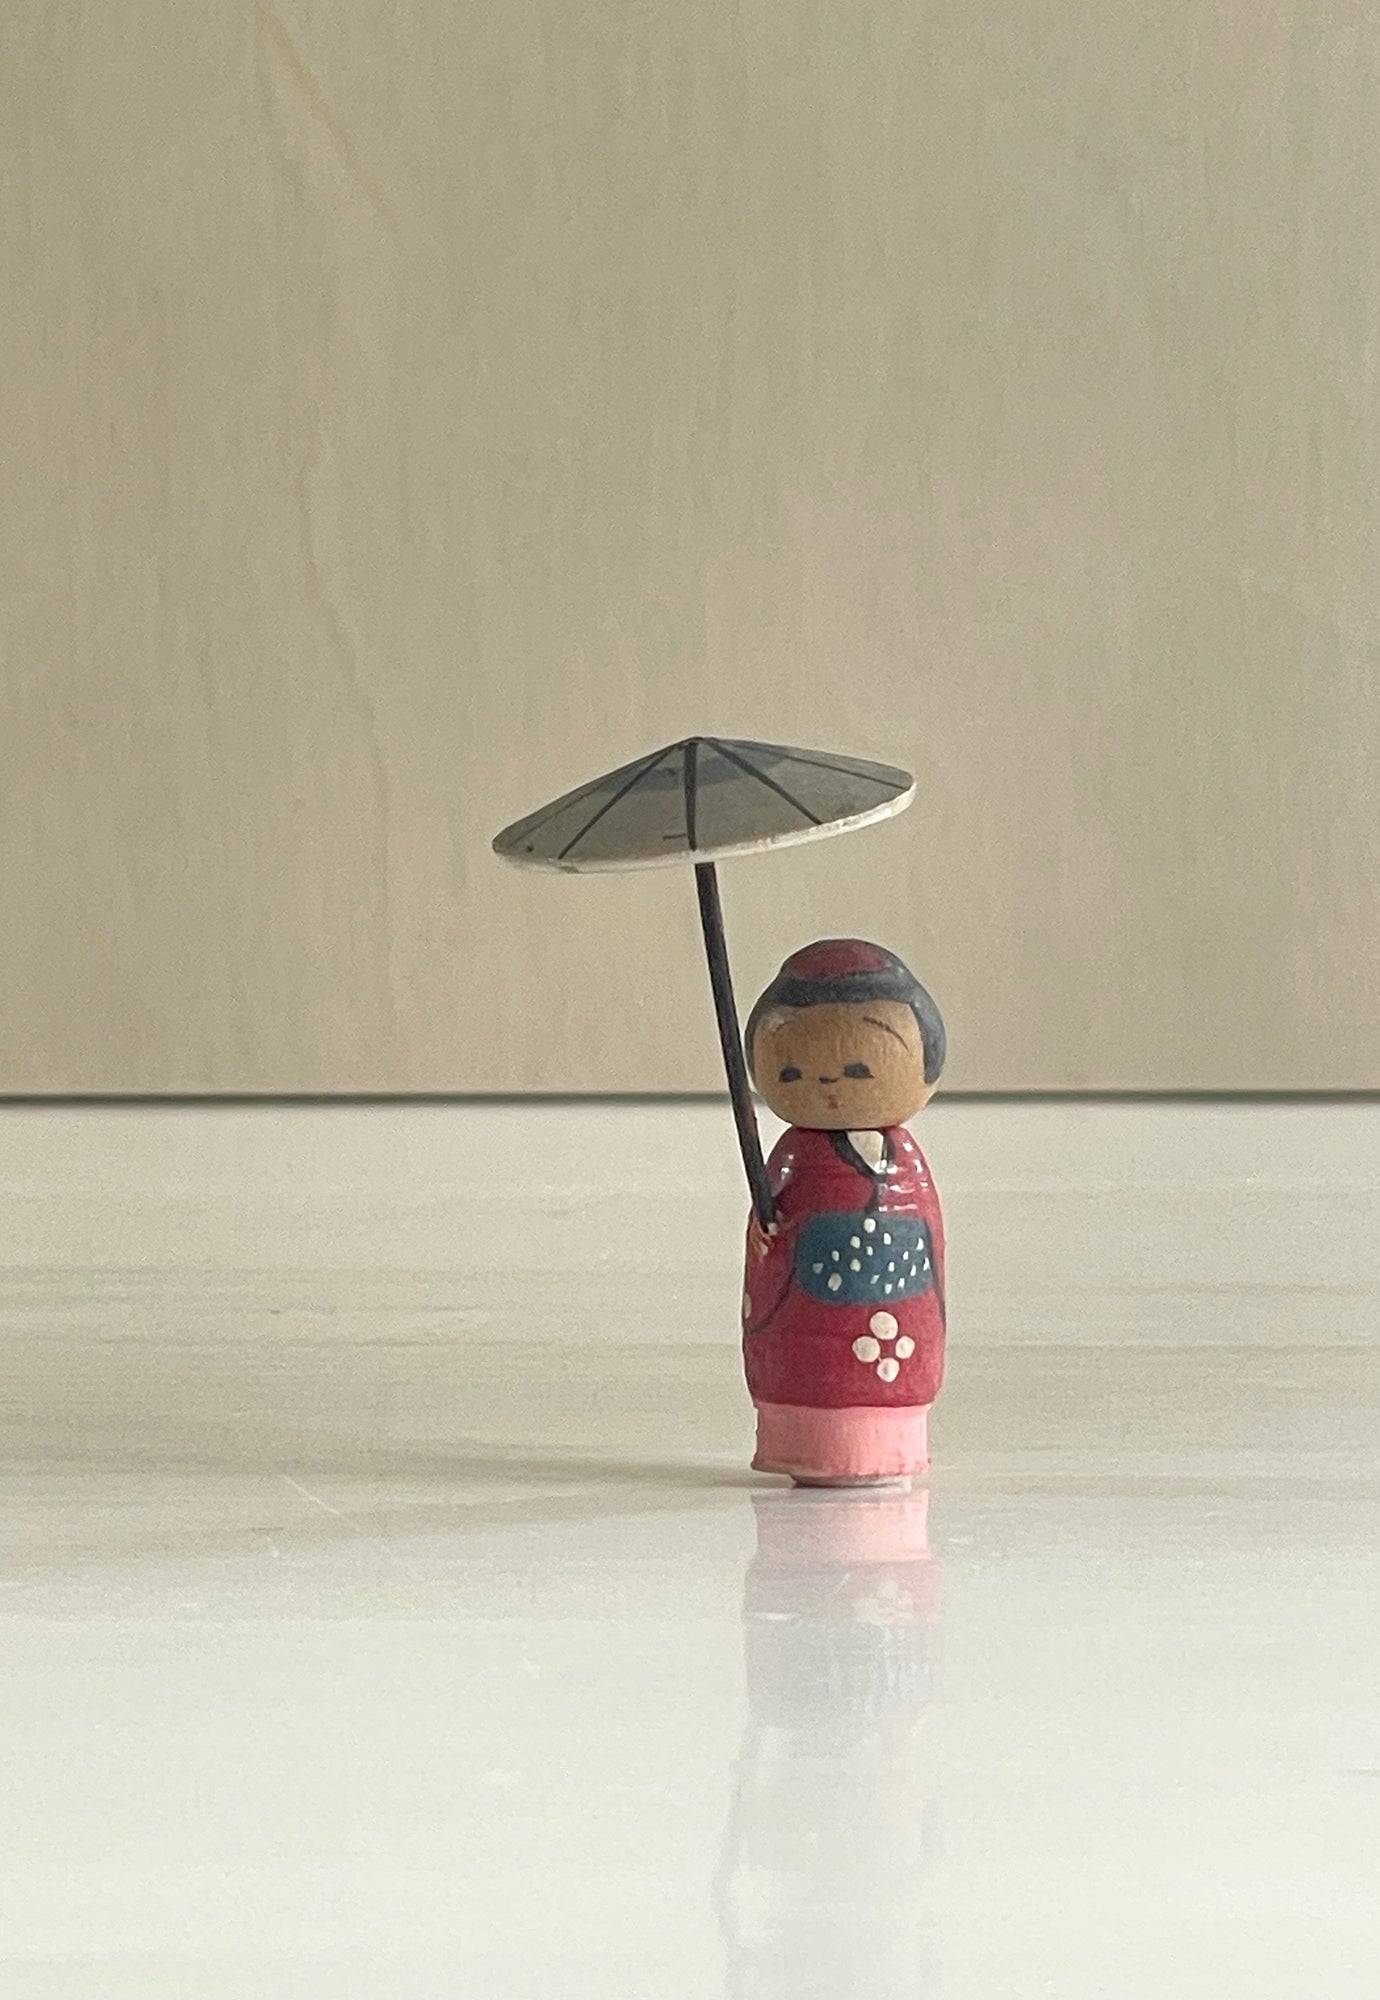 kokeshi wooden doll